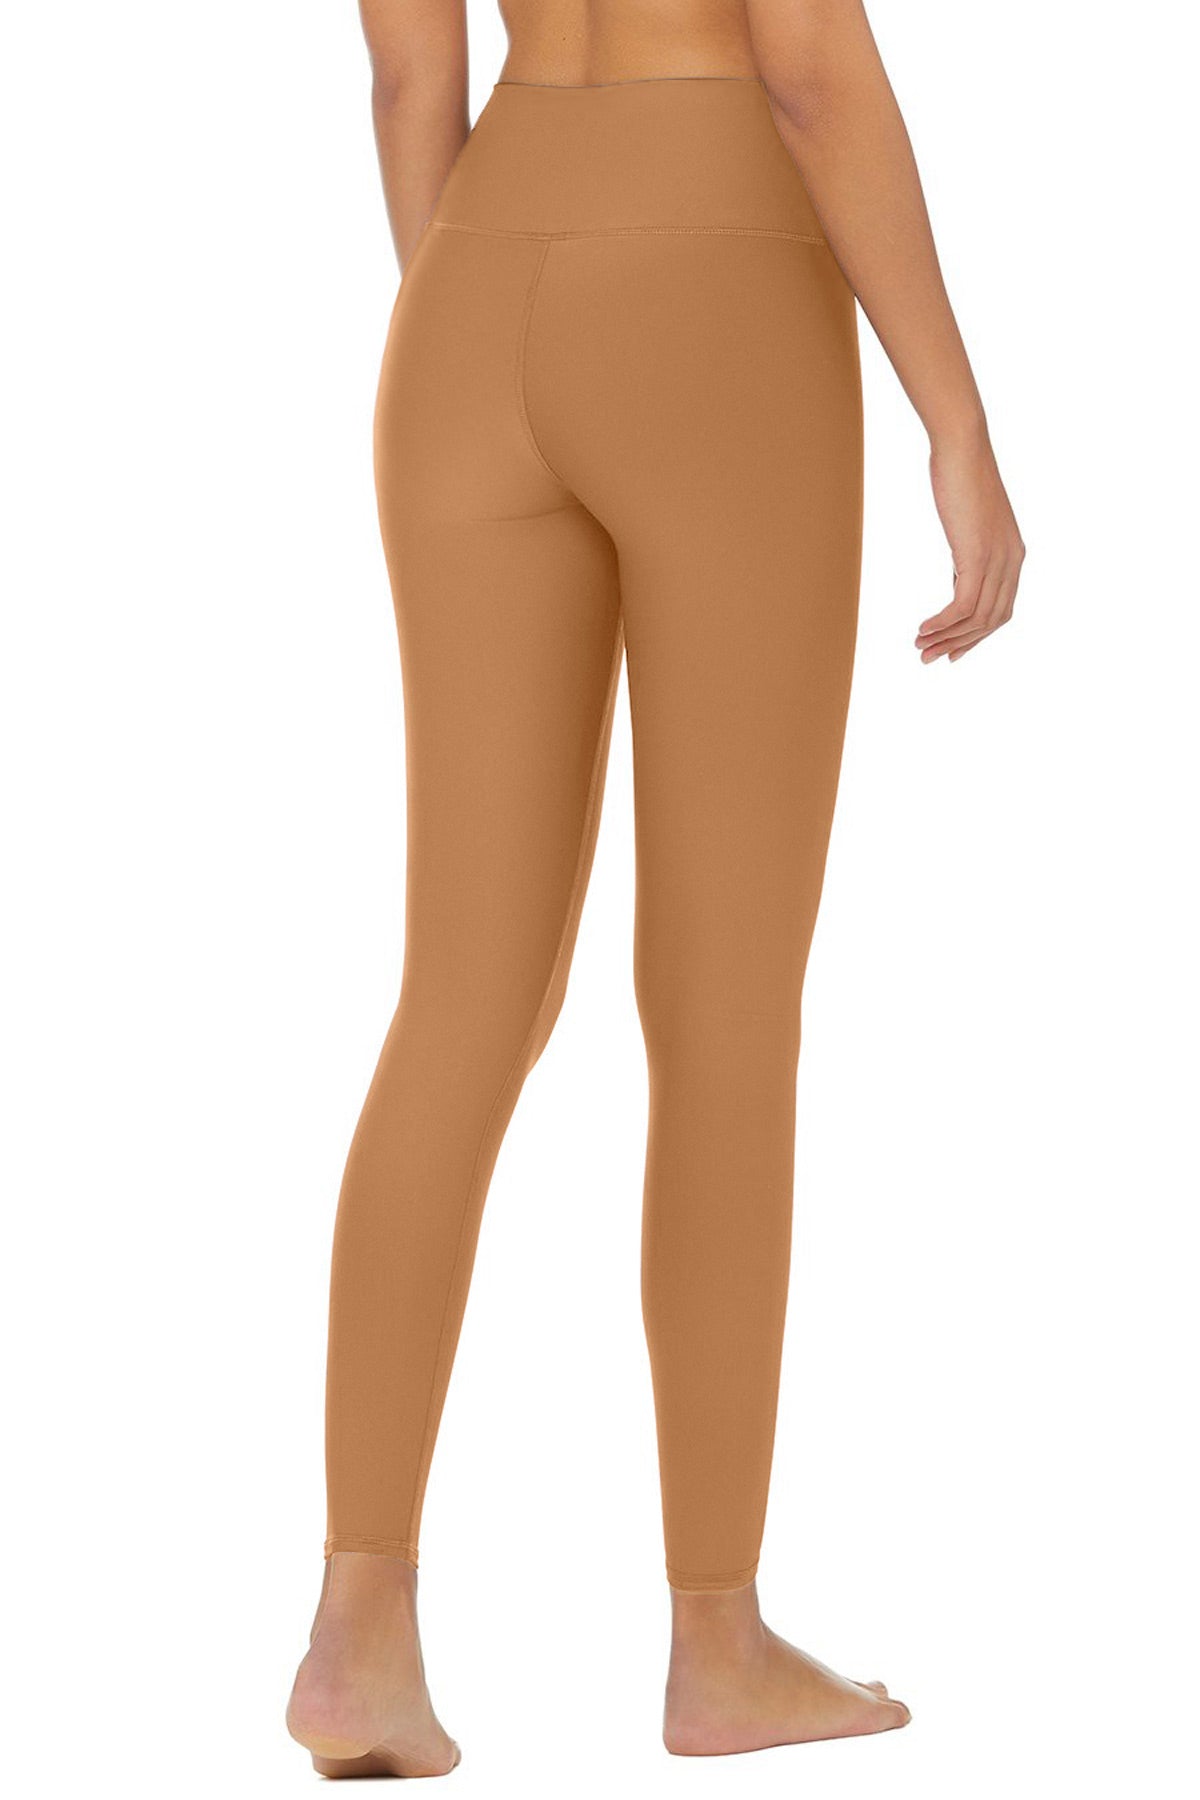 SEMI-ANNUAL SEMI-ANNUAL SALE! Nude UV 50+ Lucy Beige Performance Leggings Yoga Pants - Women - Pineapple Clothing